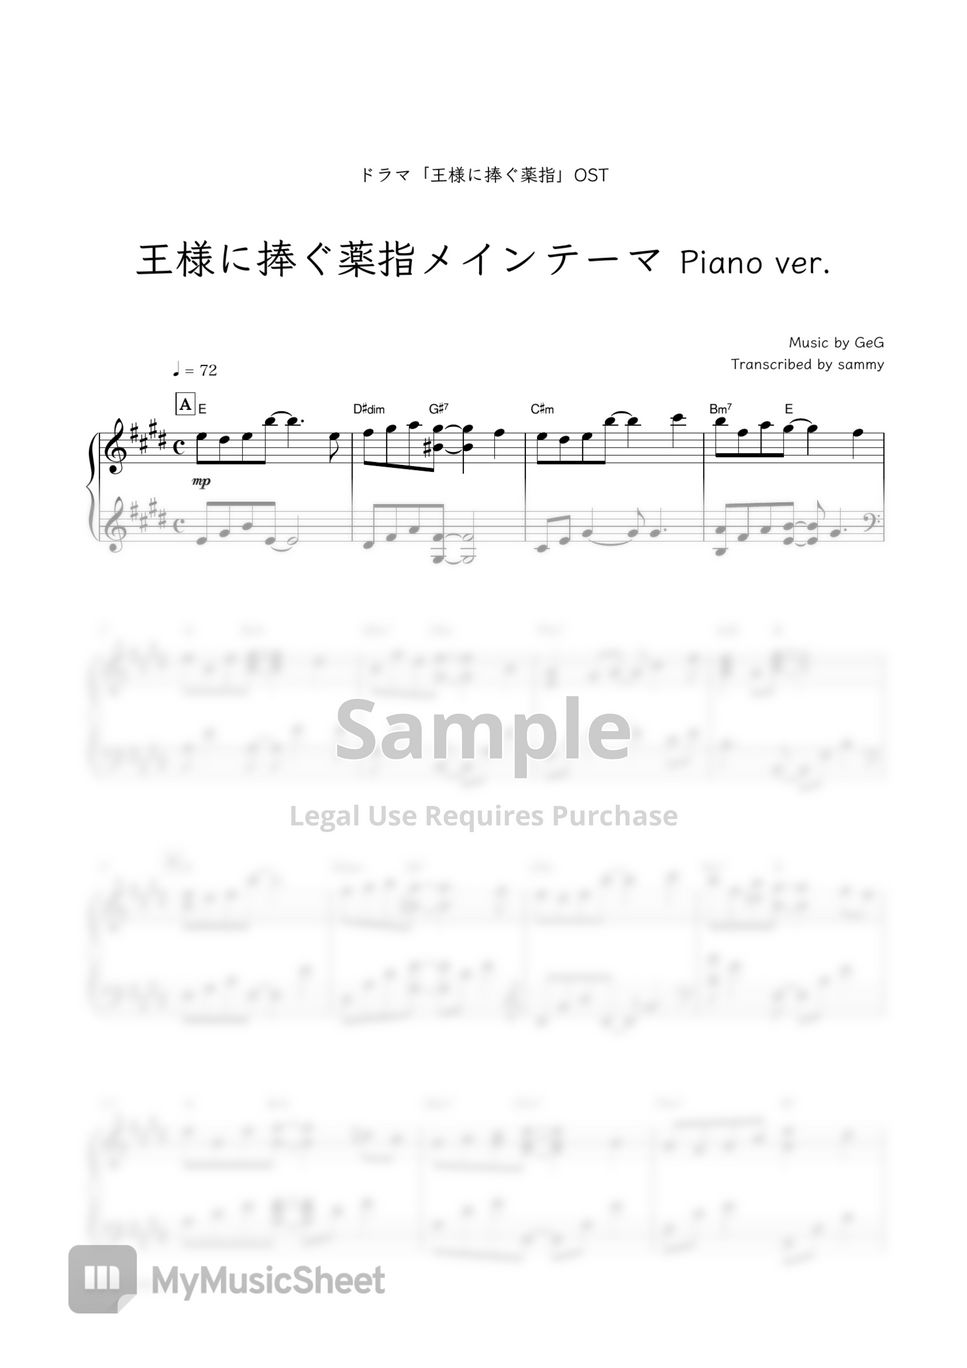 Japanese TV series  "Ousama ni Sasagu kusuriyubi (王様に捧ぐ薬指)" OST - Ousama ni Sasagu kusuriyubi Main Theme Piano ver. (王様に捧ぐ薬指) by sammy